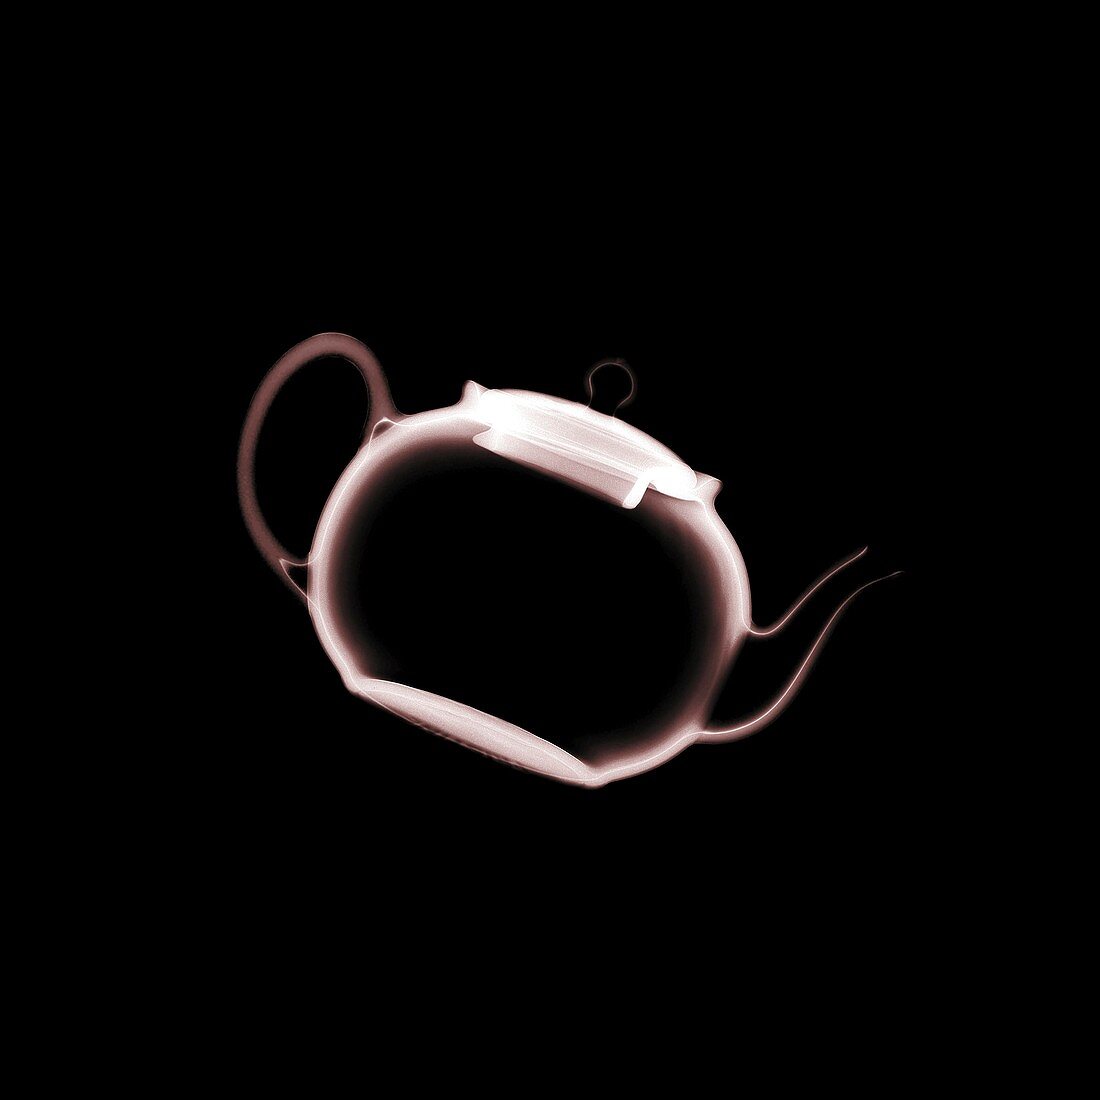 Teapot, X-ray